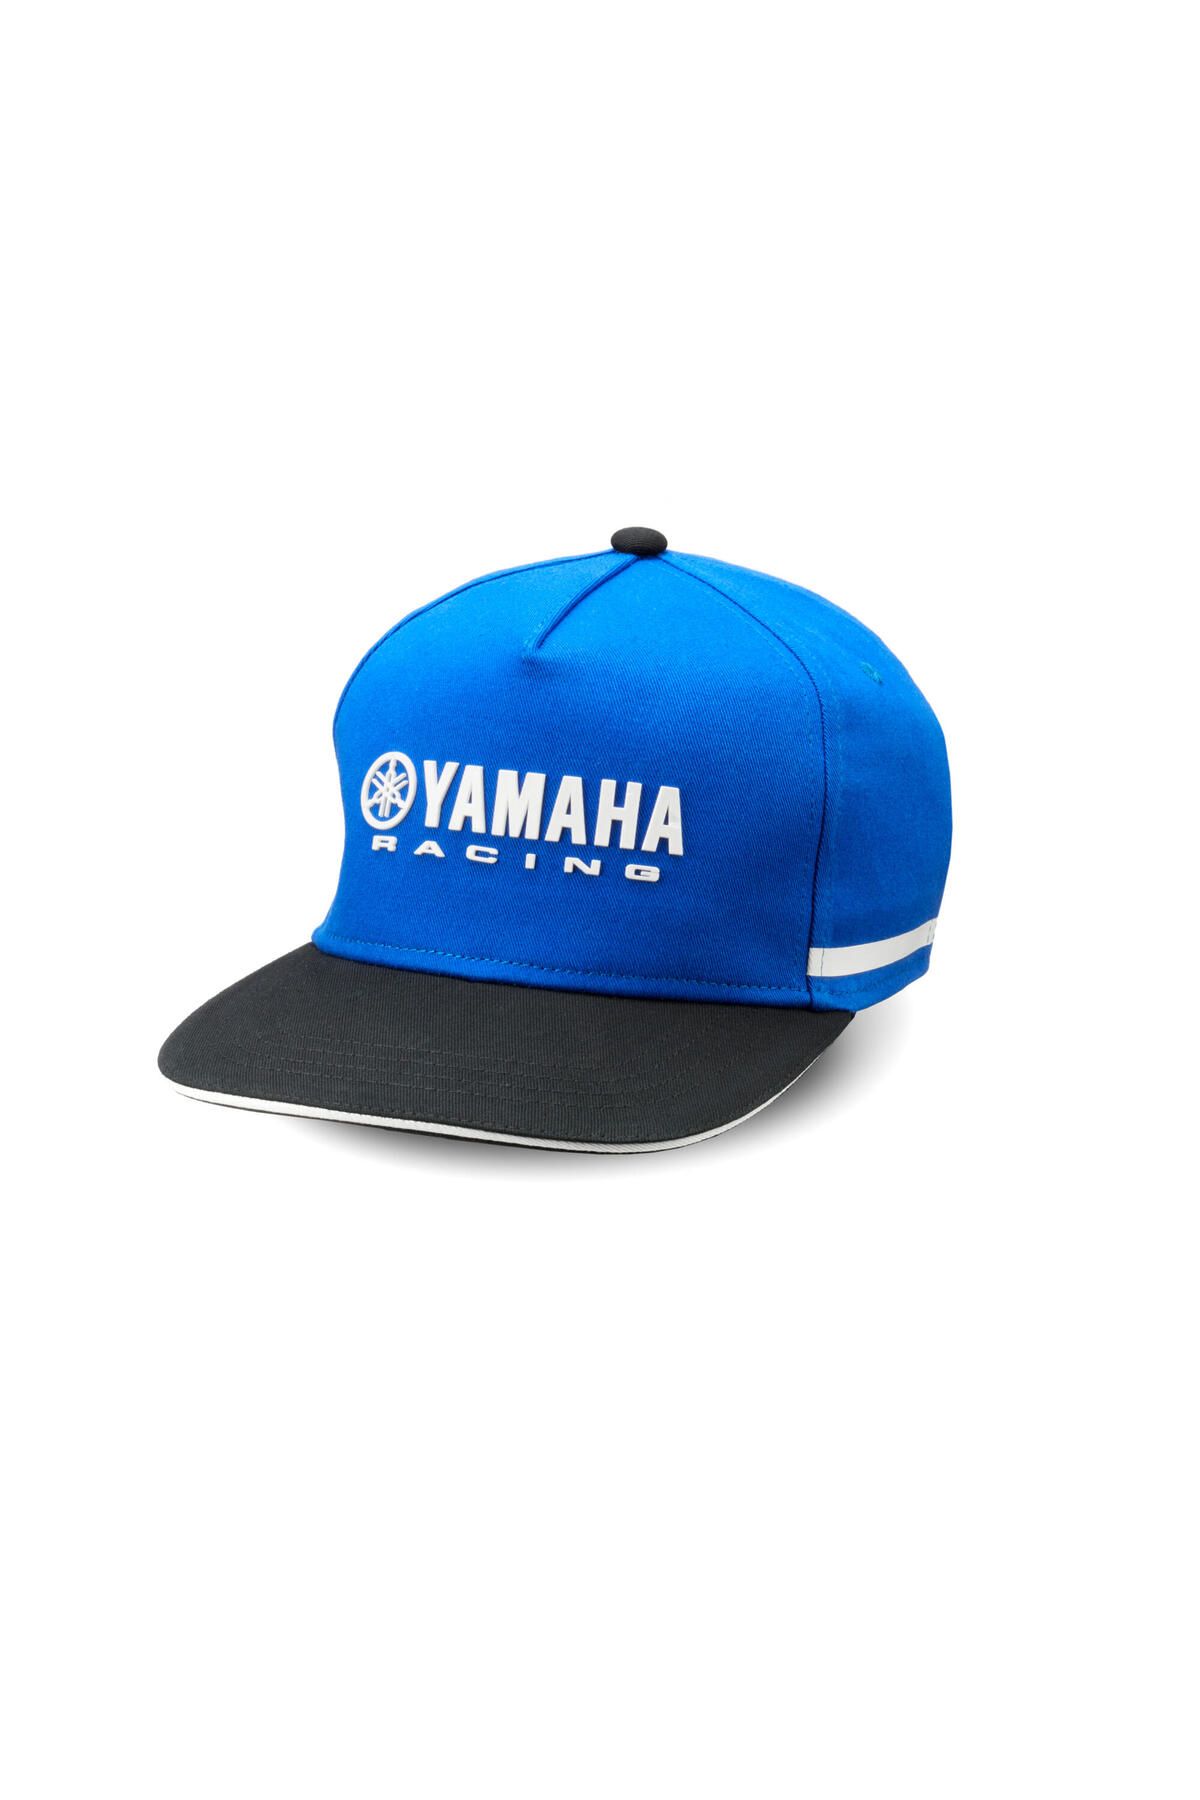 Yamaha Paddock Blue Yetişkin Yarış Şapkası